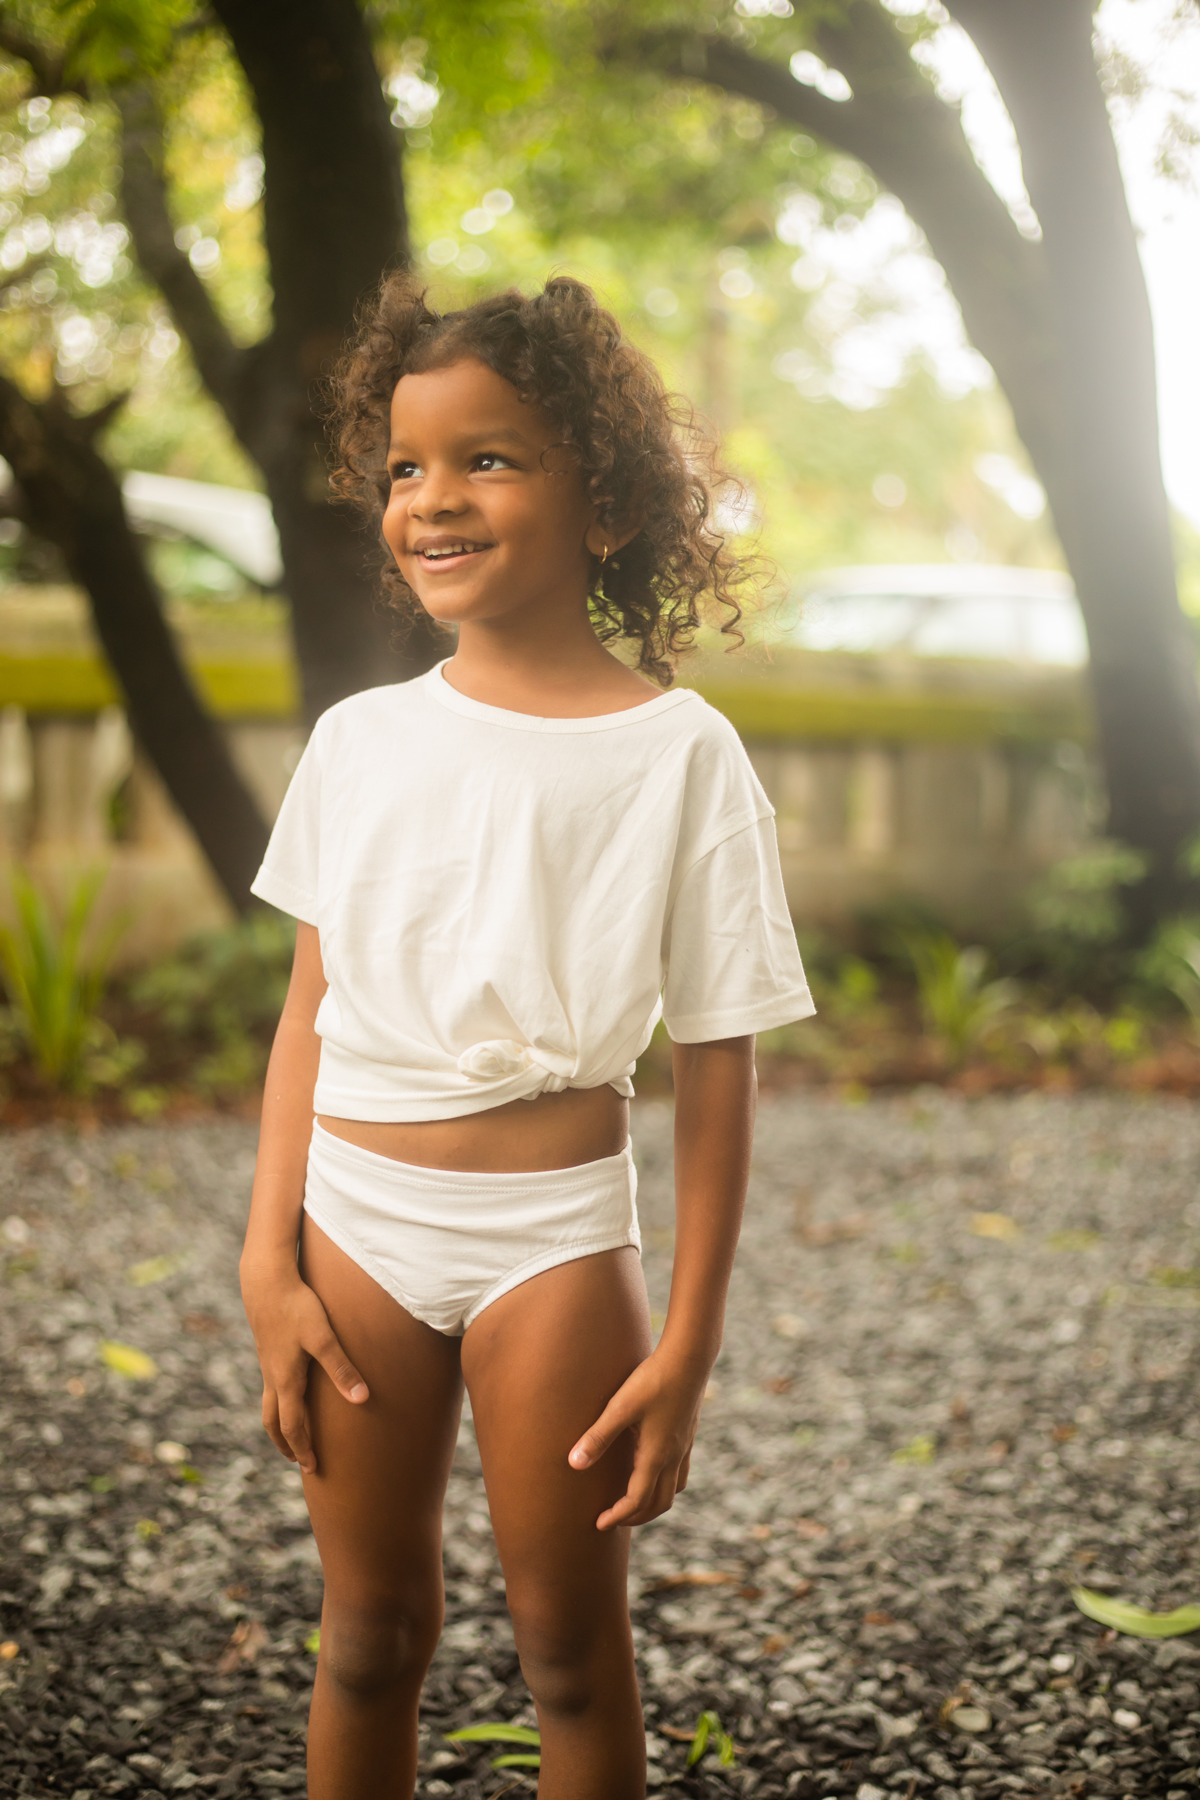 Organic Cotton Kids Bikini Underwear - 3 Pack